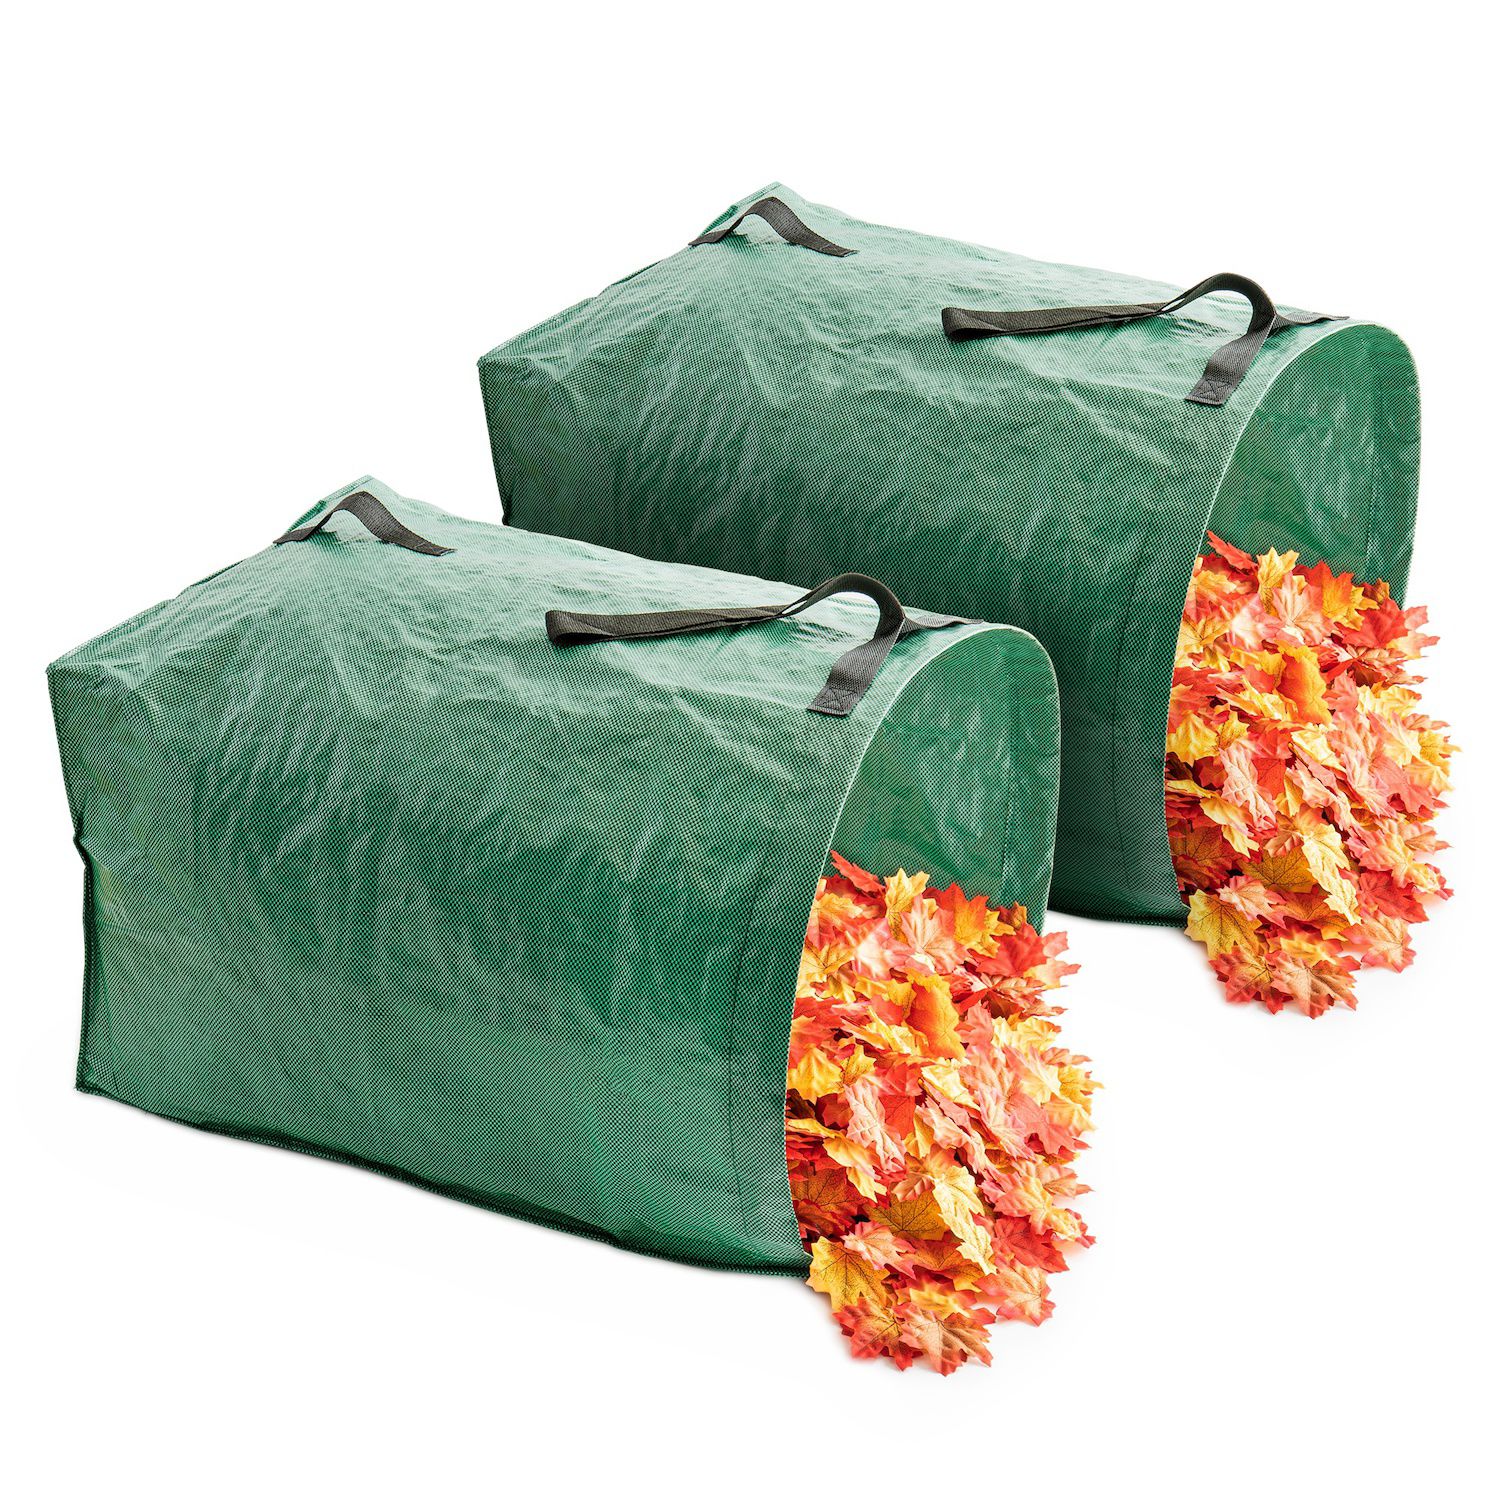 Okuna Outpost 24 Pack Medium Non Woven Tote Bags, Reusable Produce